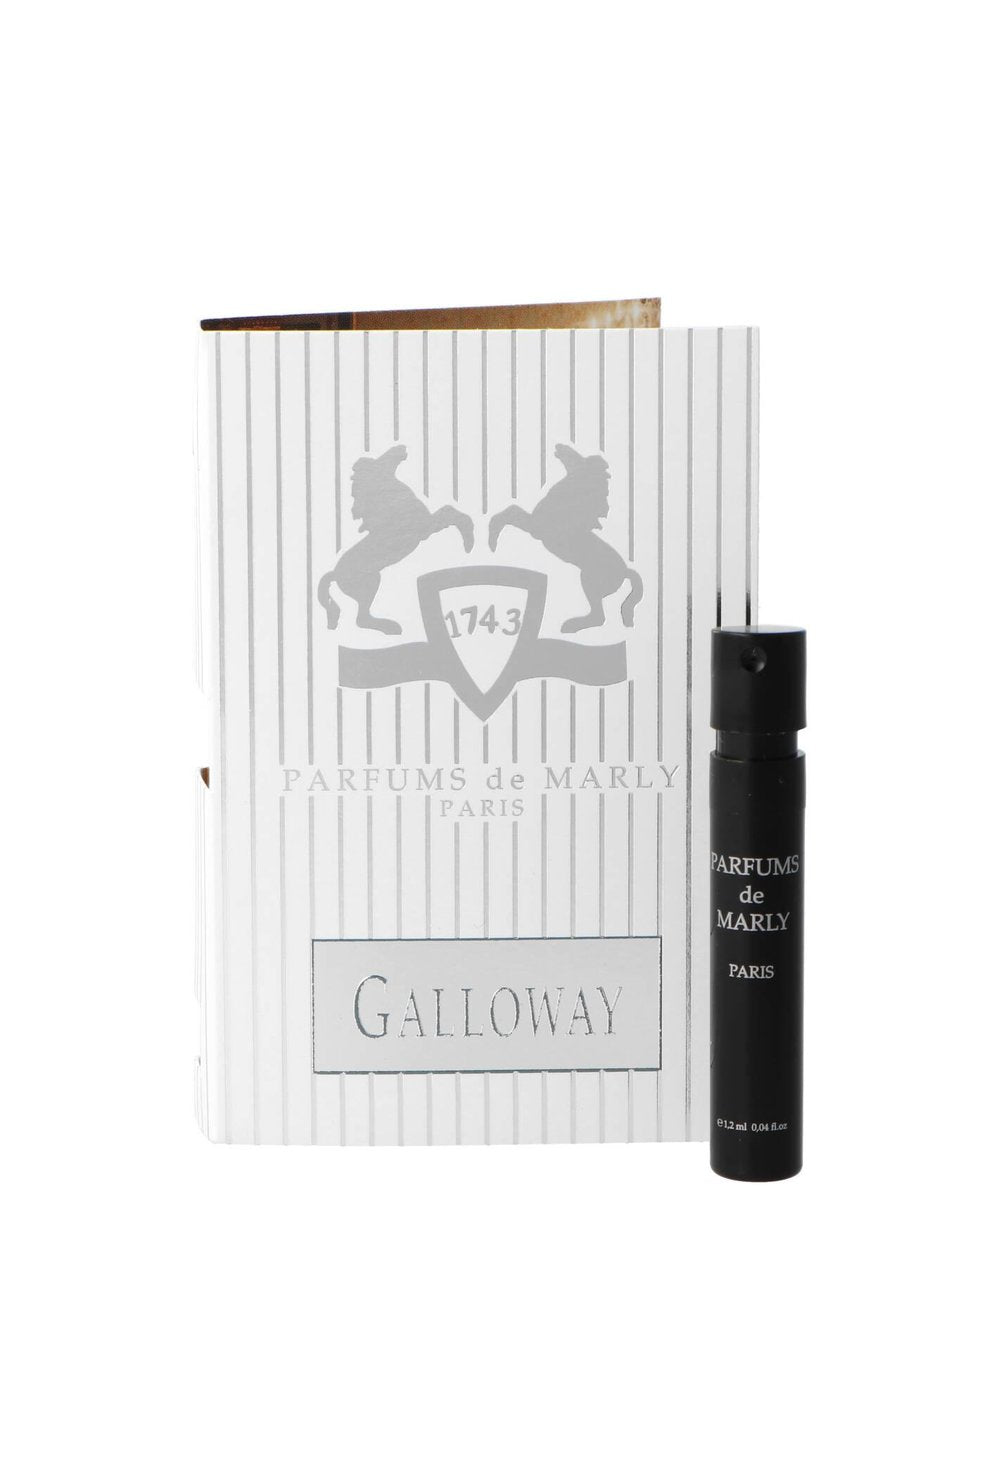 Parfums de Marly Galloway 1.2 ml 0.04 fl.oz επίσημο Δείγμαρώματος, parfums de marly galloway 1.2 .oz uradni vzorec parfuma